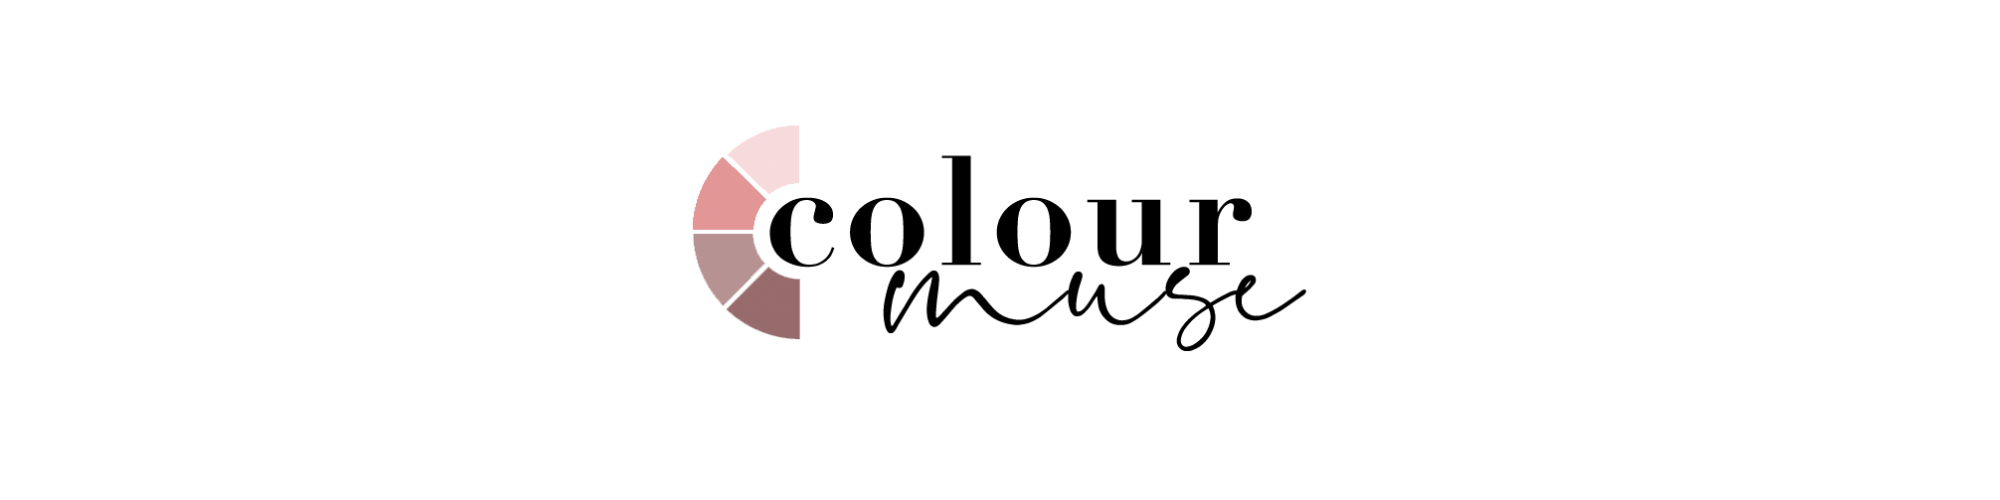 Colour Muse Design is Lauren McDonnell's beautiful graphic design business